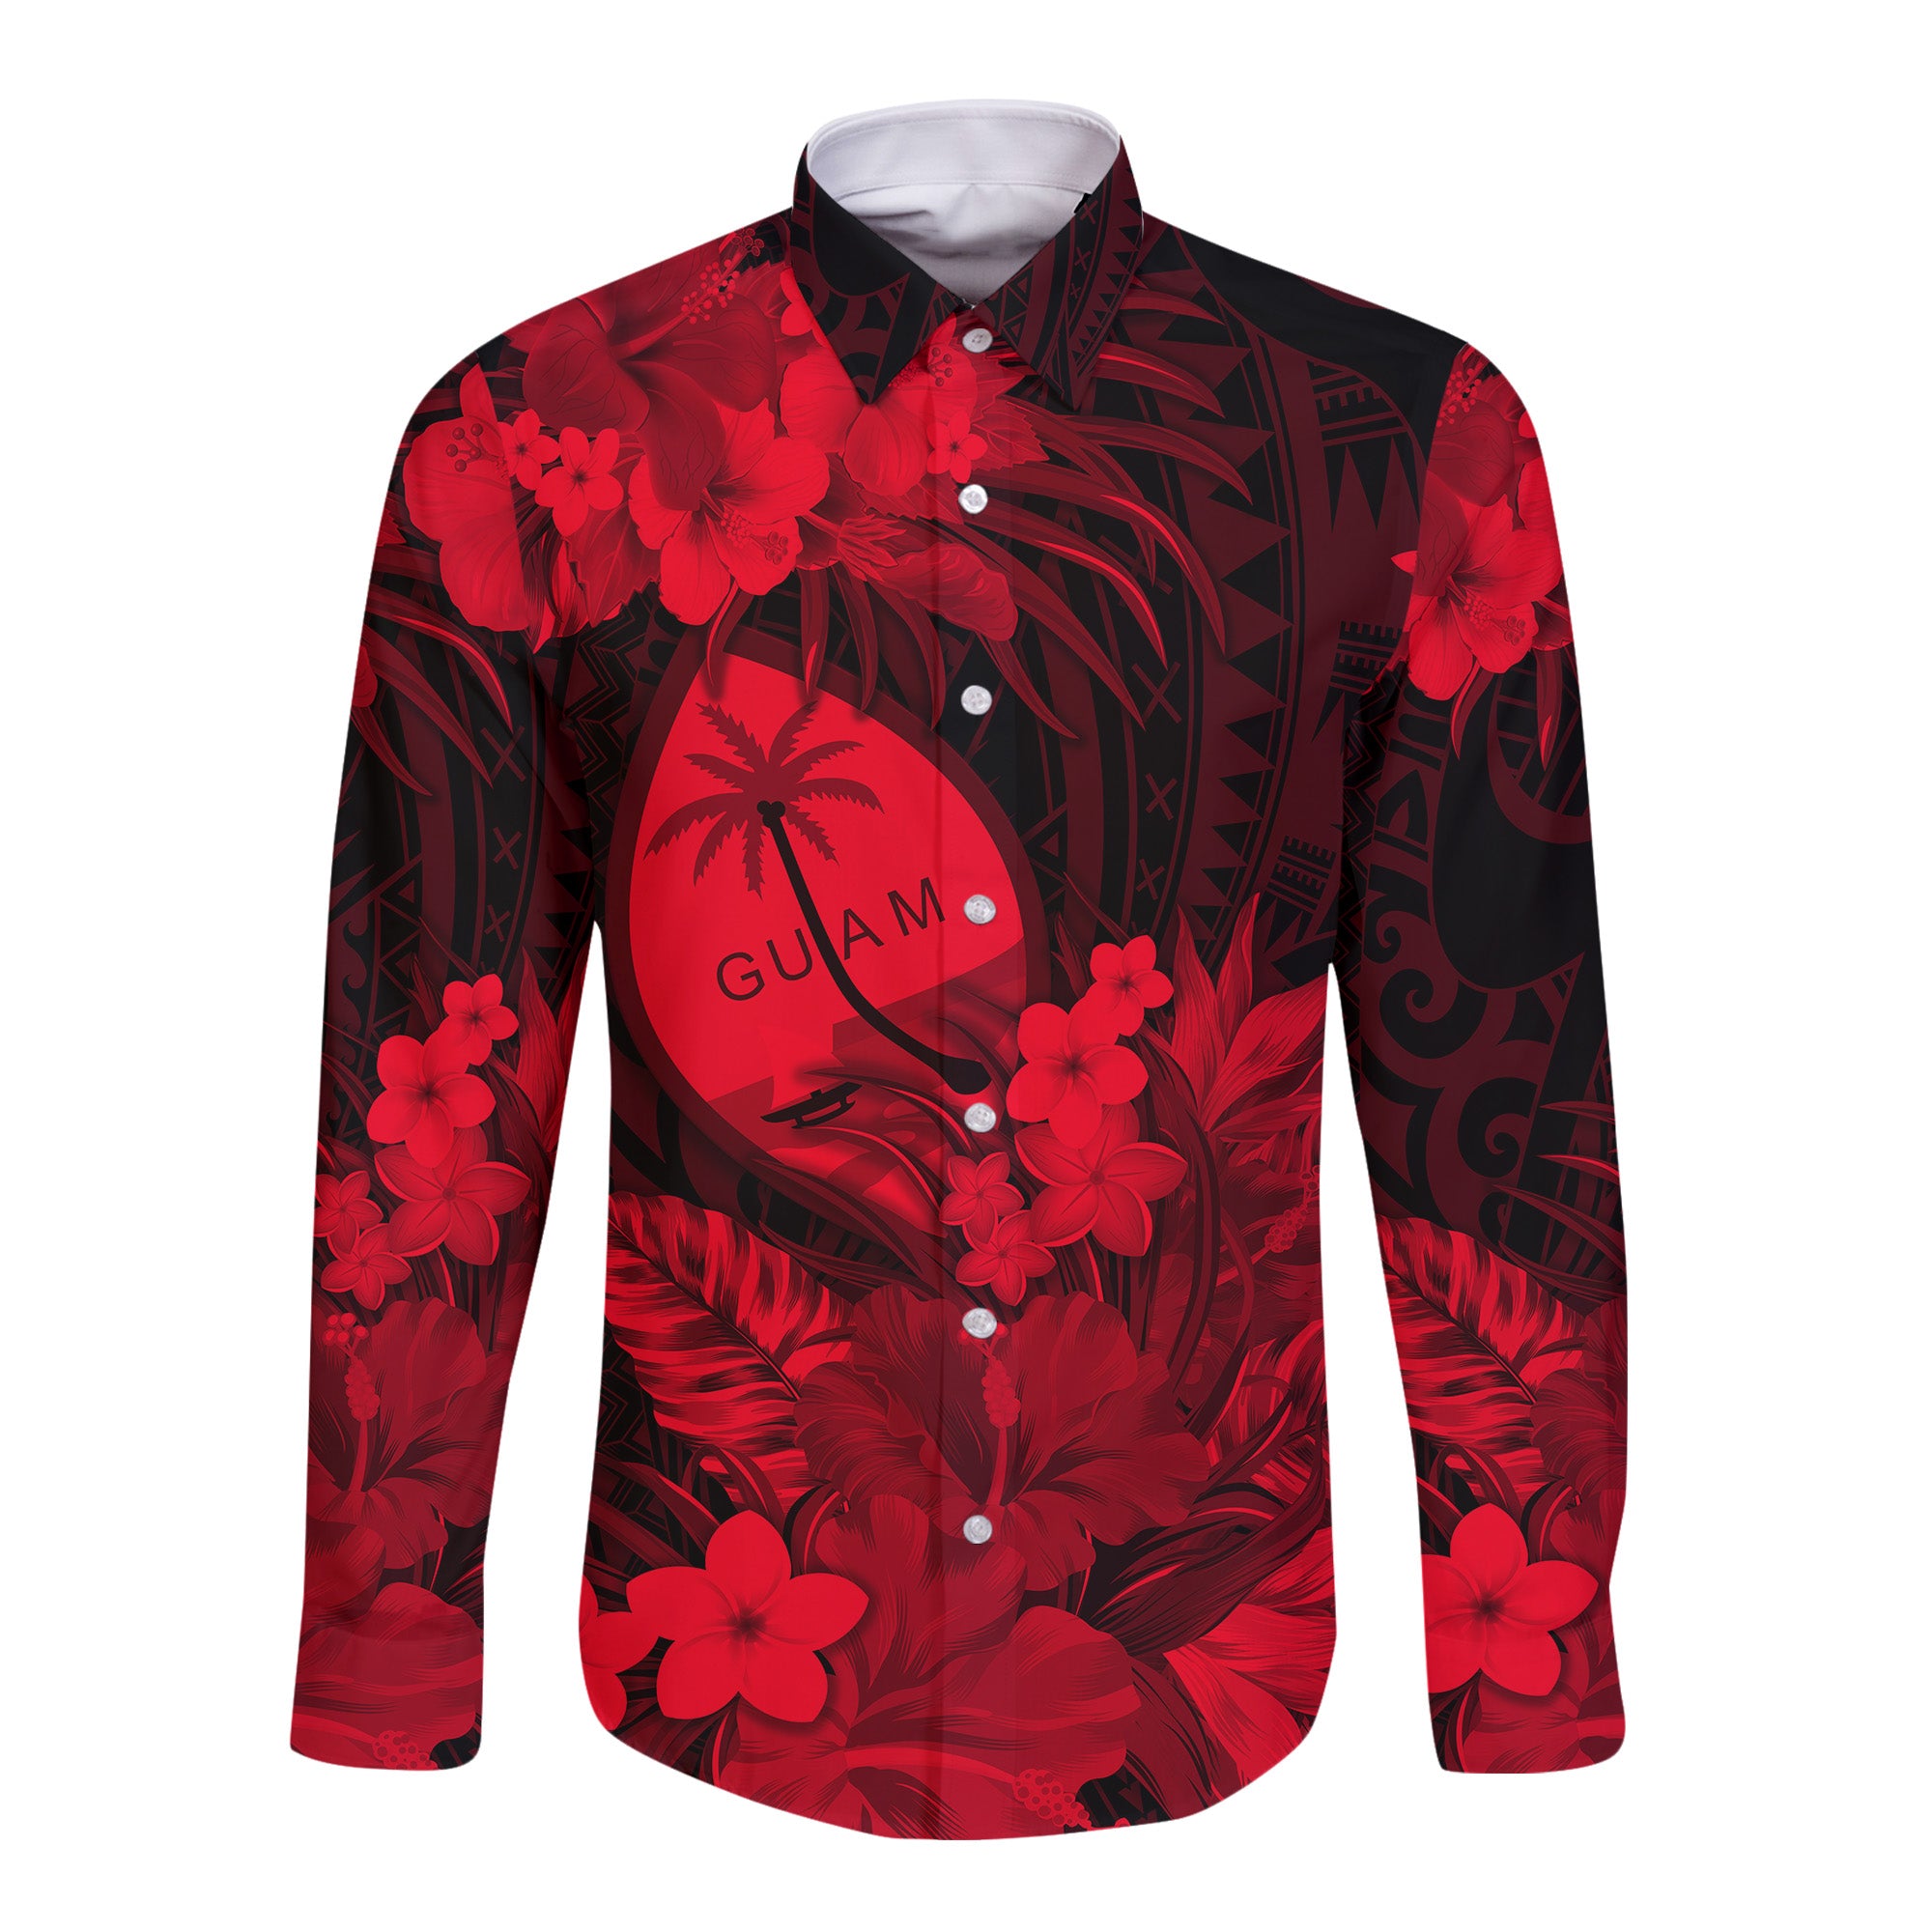 (Custom Personalised) Guam Polynesian Hawaii Long Sleeve Button Shirt Tropical Flowers - Red LT8 - Polynesian Pride